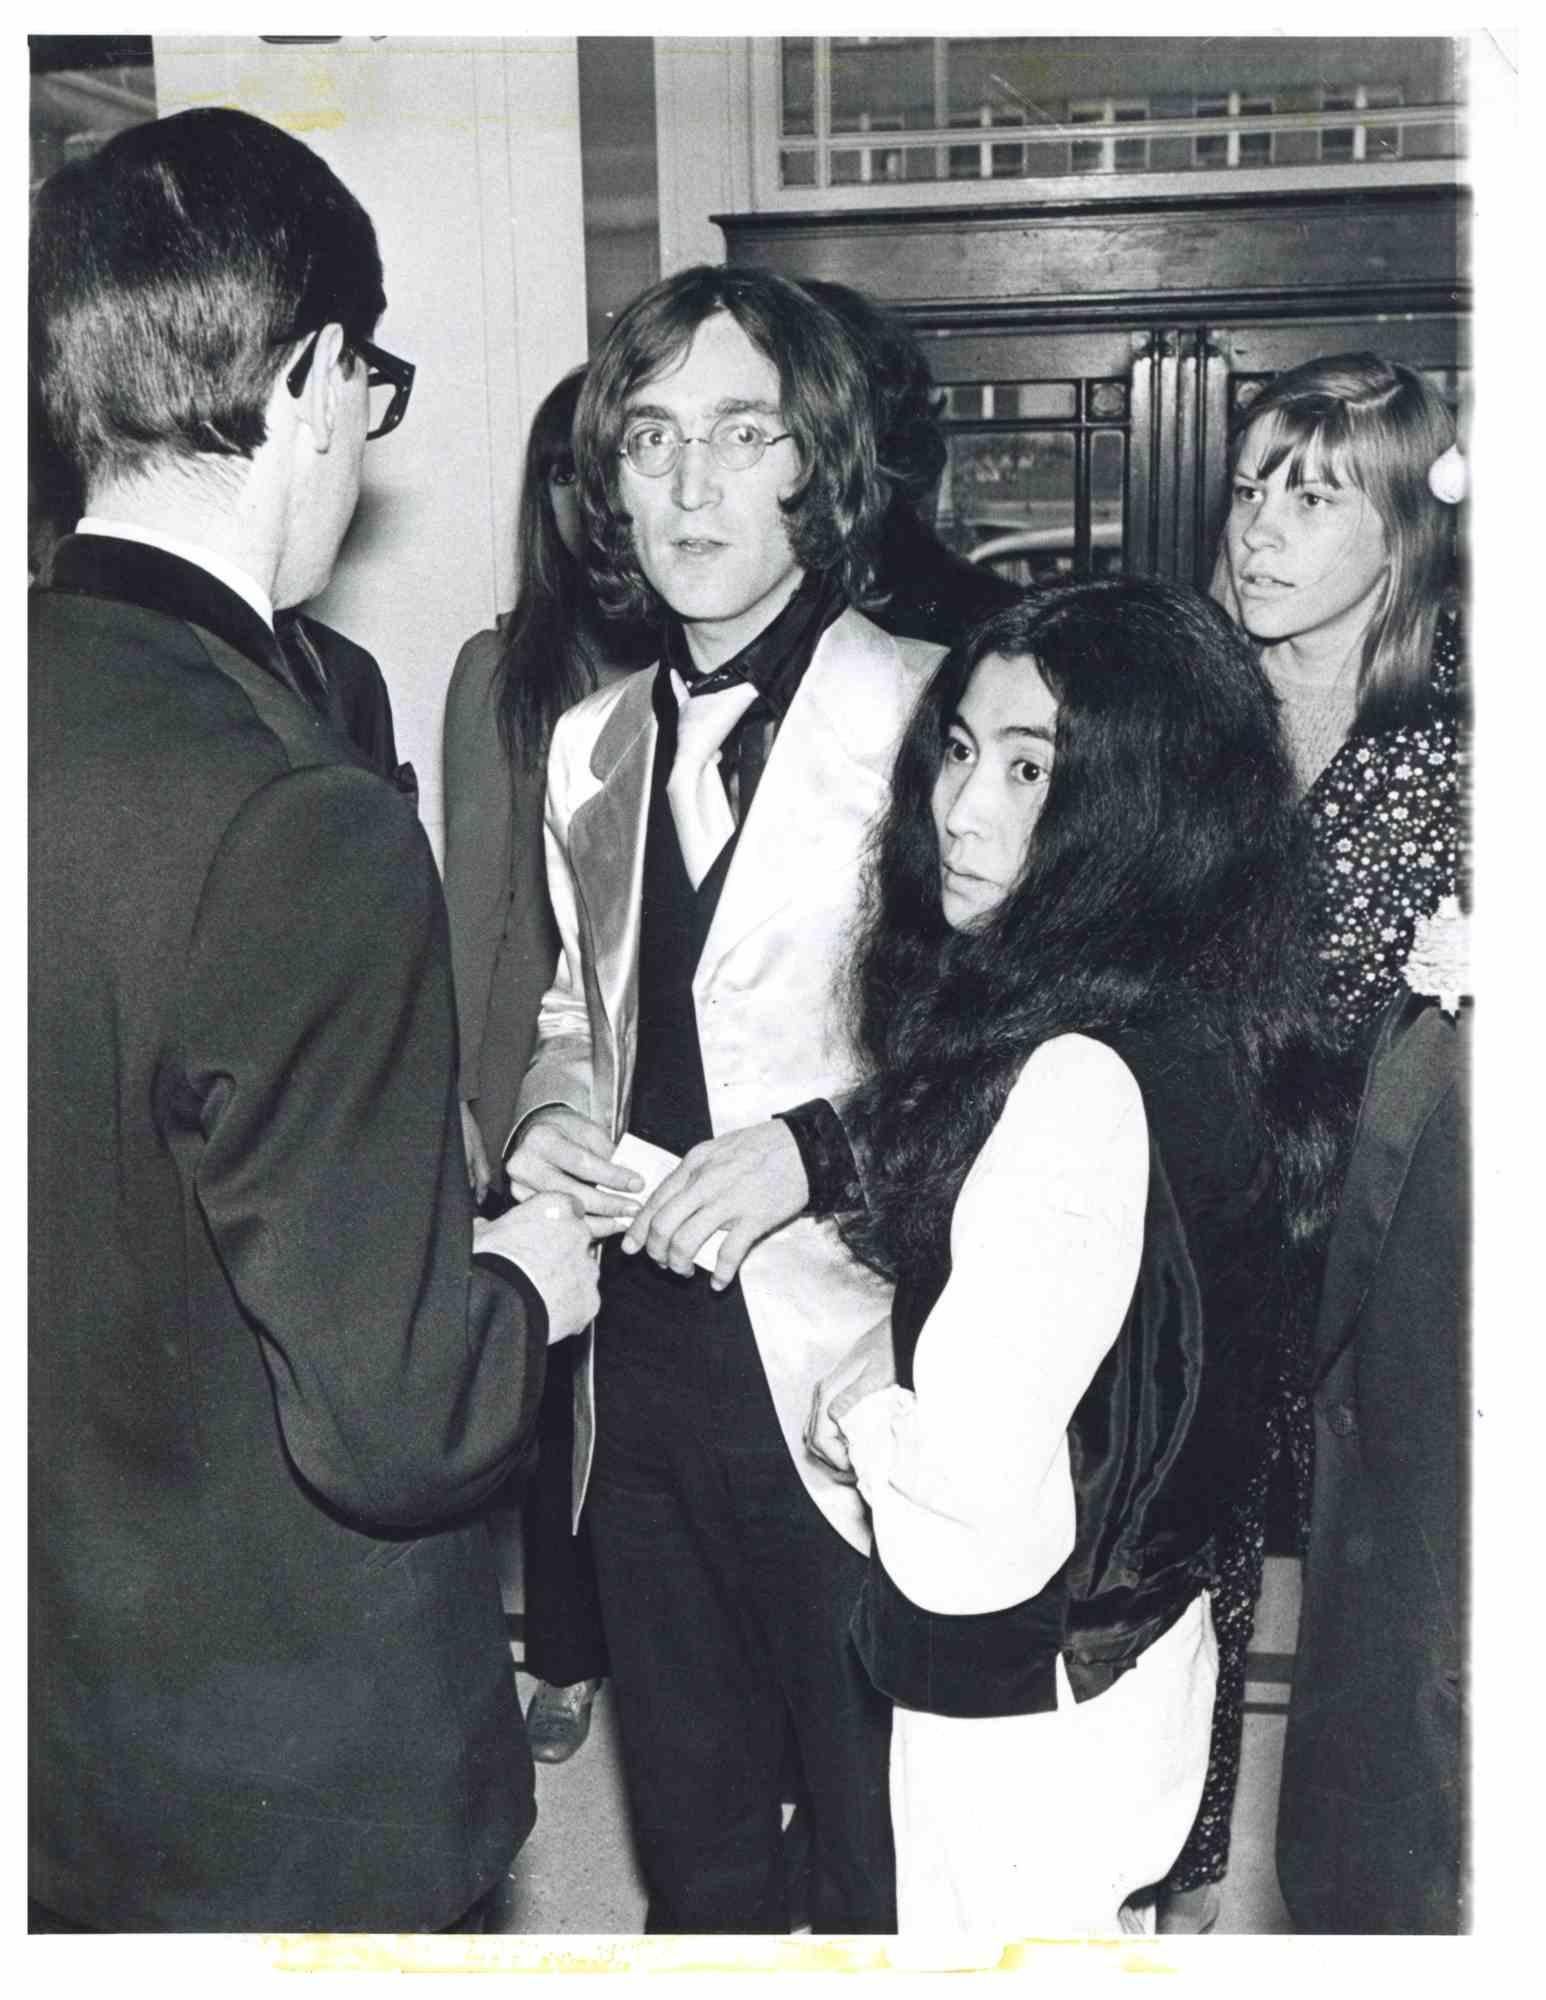 Unknown Portrait Photograph - John Lennon and Yoko Ono in 1968 - Vintage Photograph